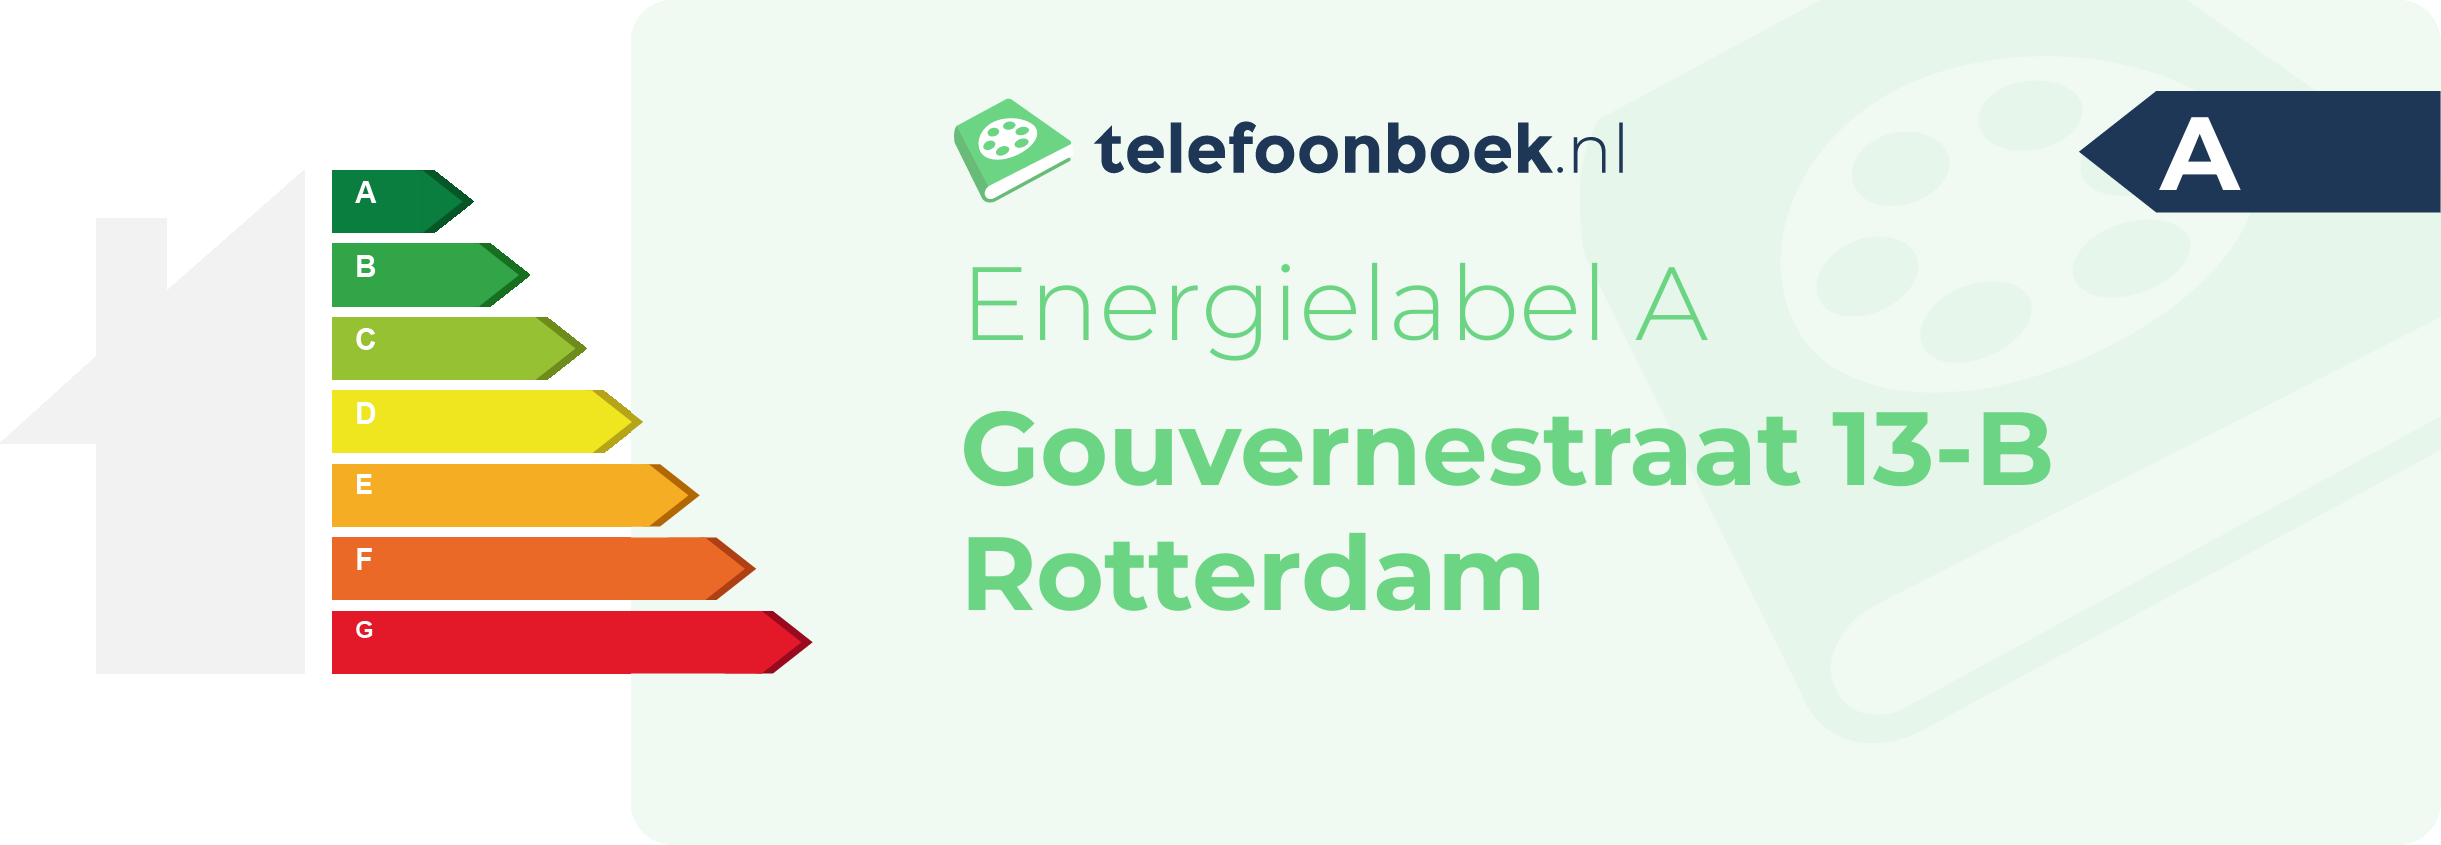 Energielabel Gouvernestraat 13-B Rotterdam